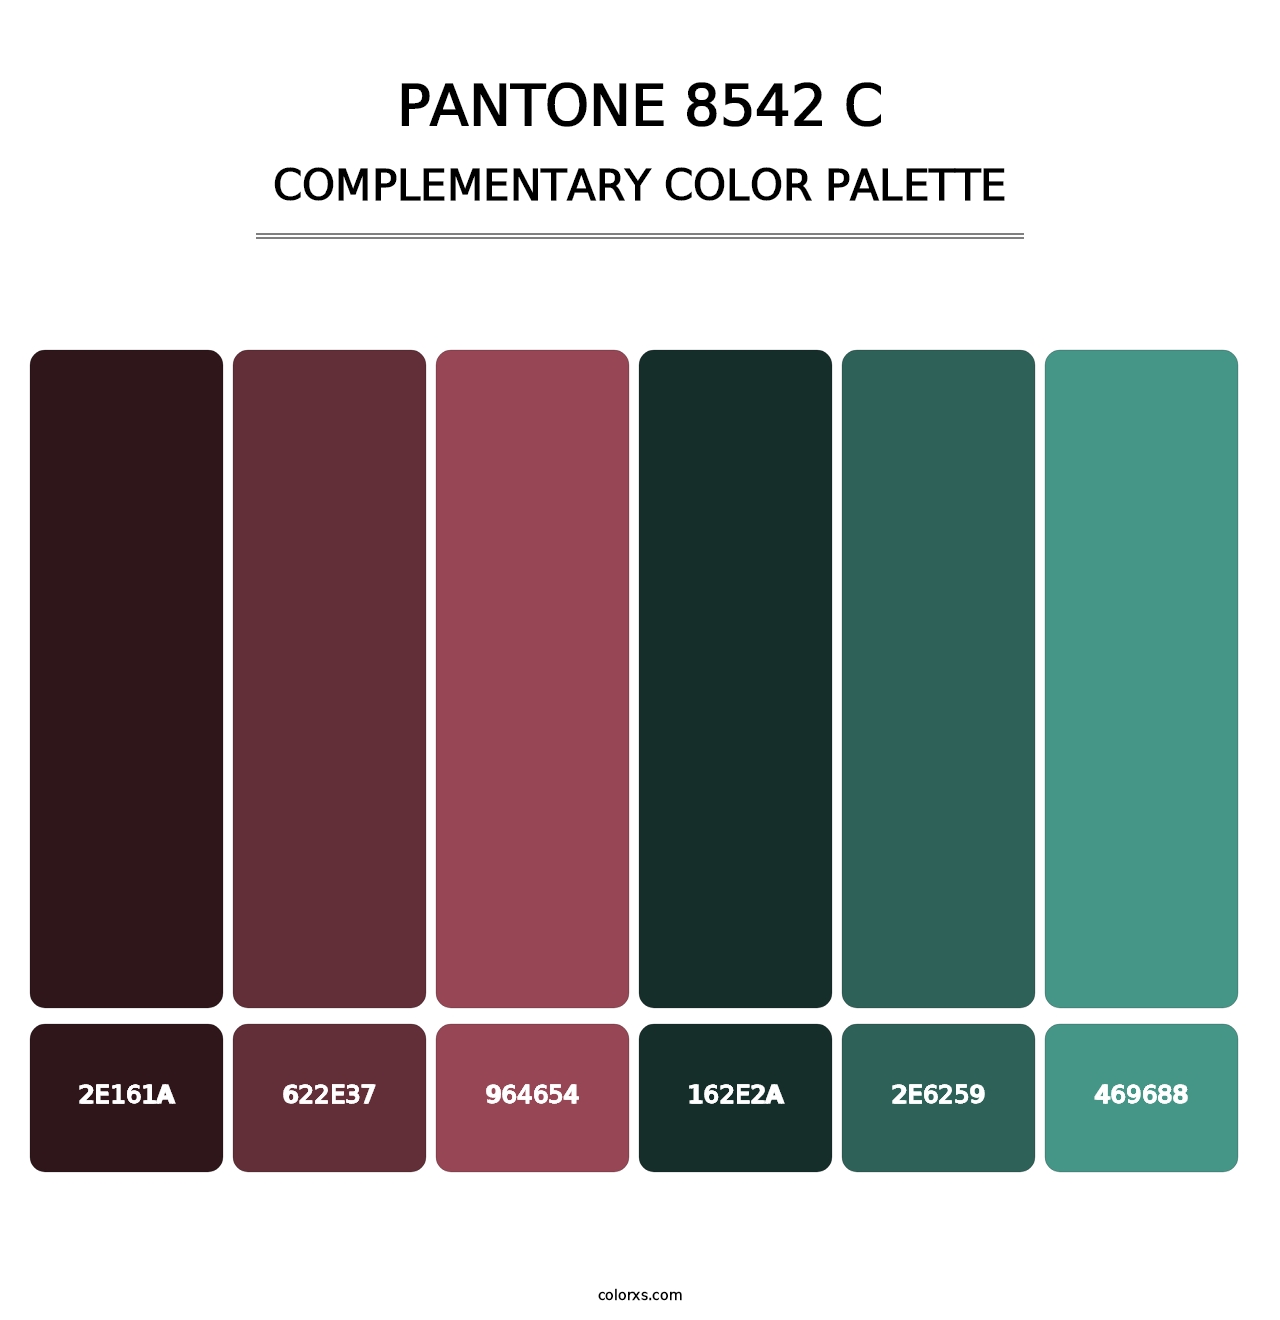 PANTONE 8542 C - Complementary Color Palette